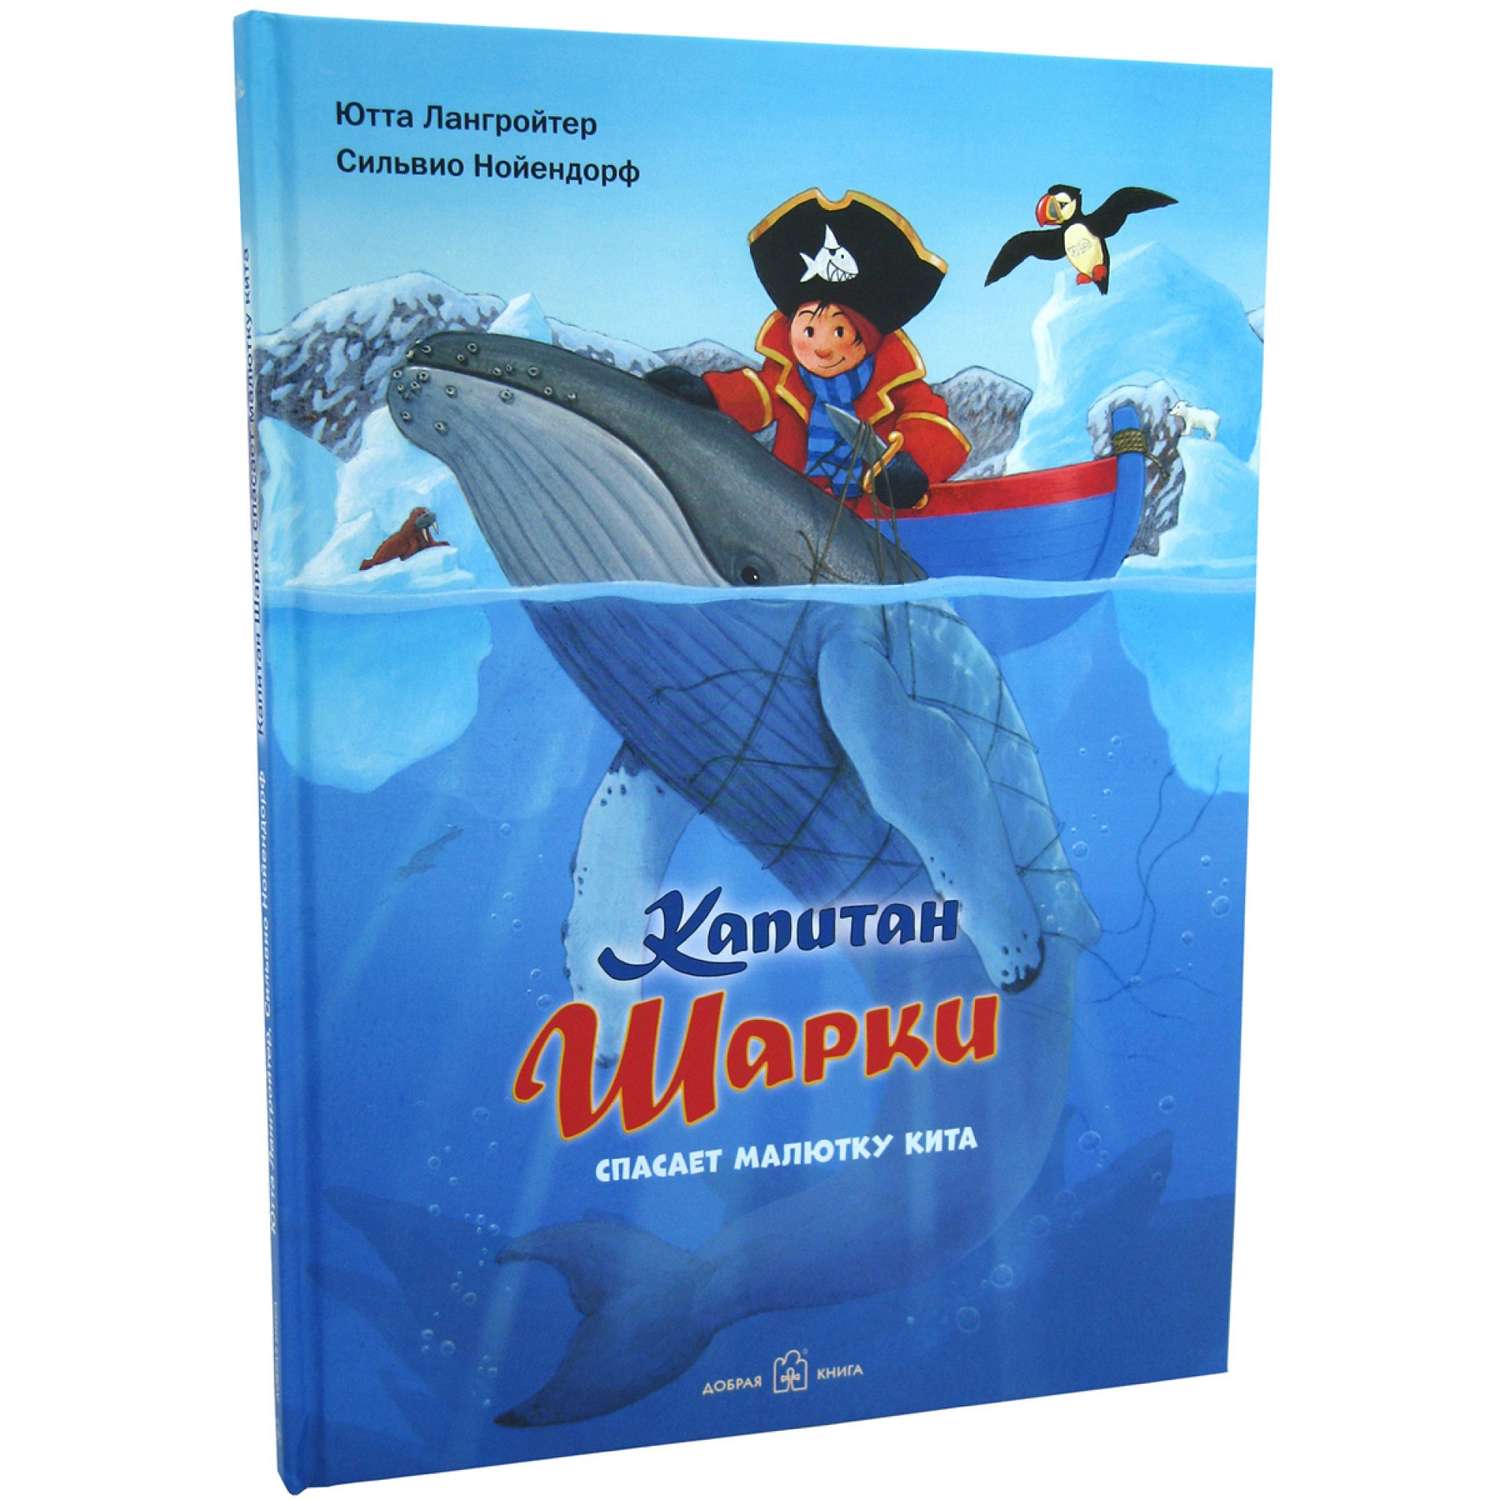 Книга Добрая книга Капитан Шарки спасает малютку кита. Иллюстрации Сильвио Нойендорфа - фото 2